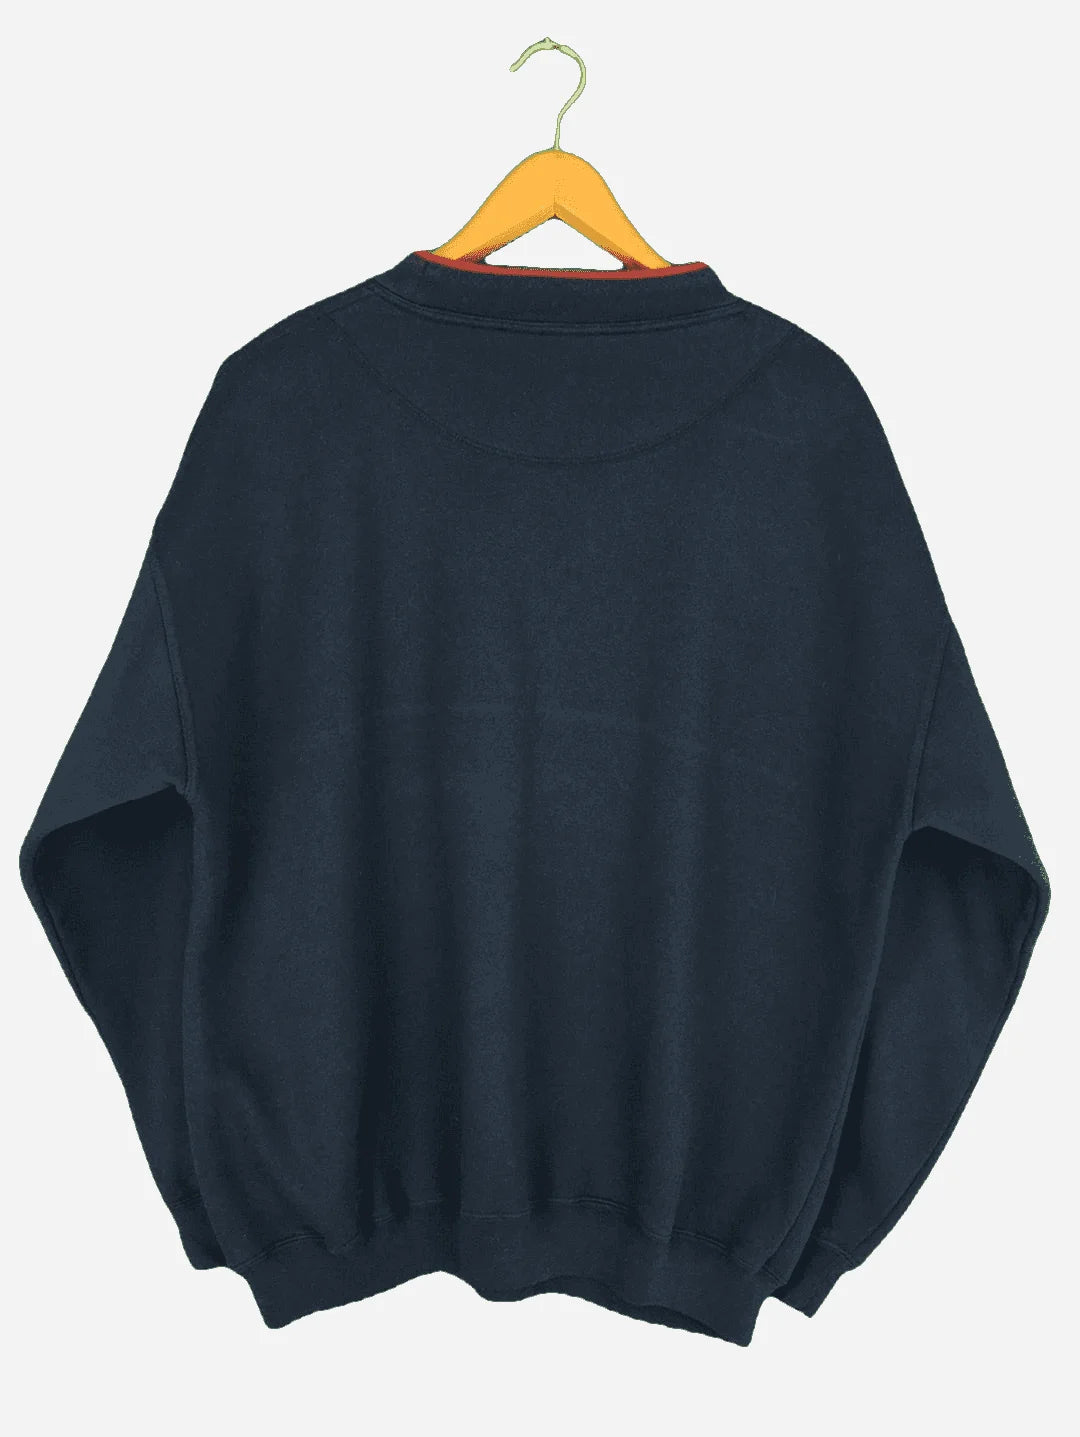 Marc Gibaldi Sweater (XL)